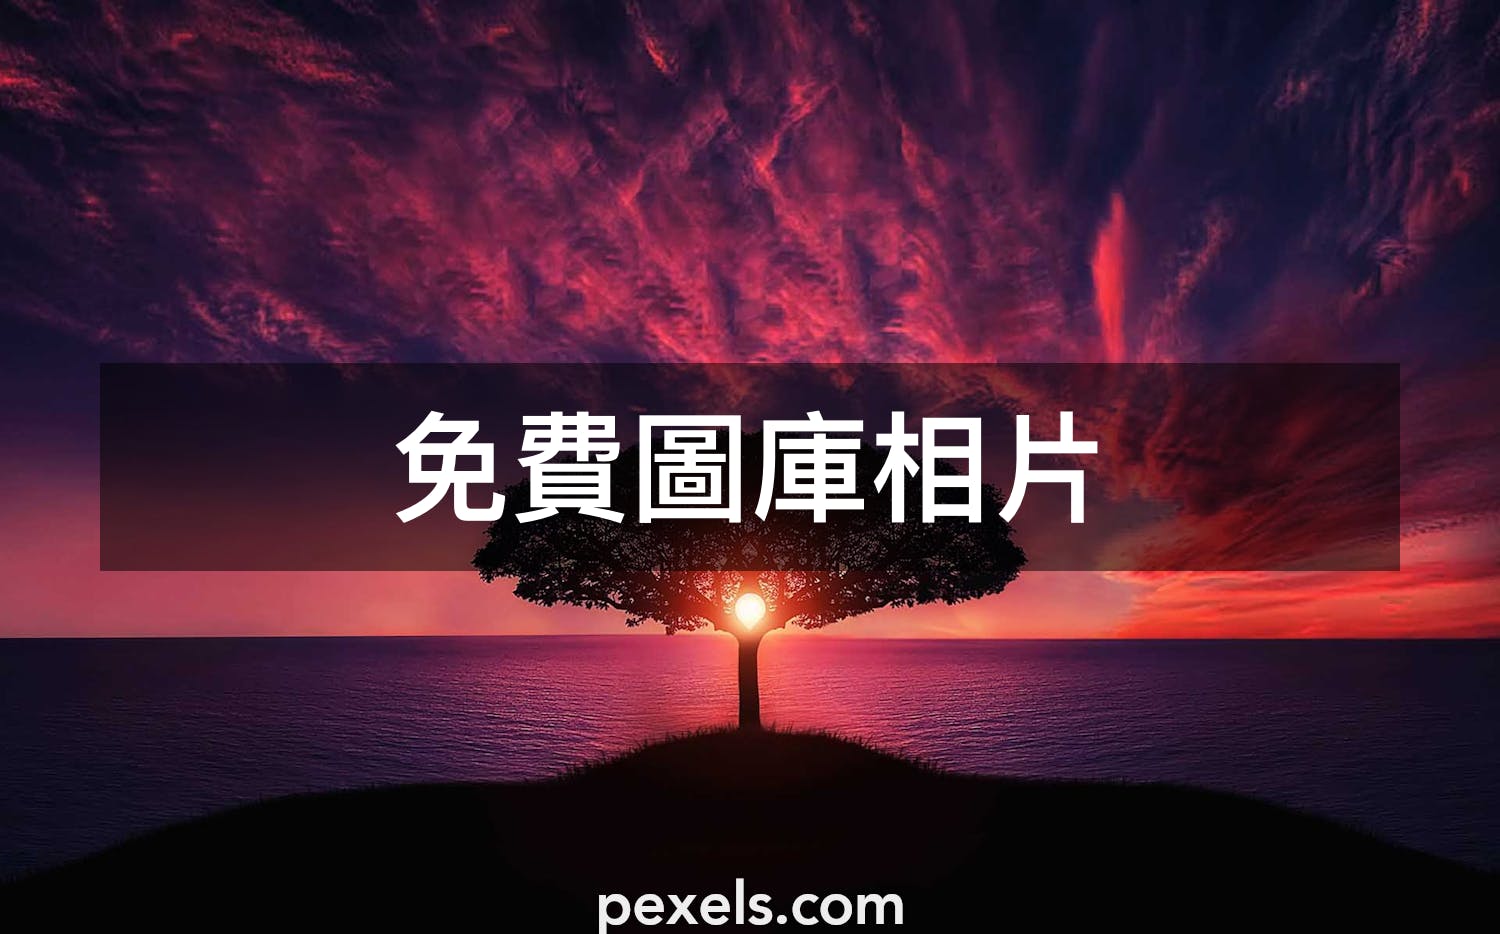 1000 Mac 壁紙相片 Pexels 免費圖庫相片